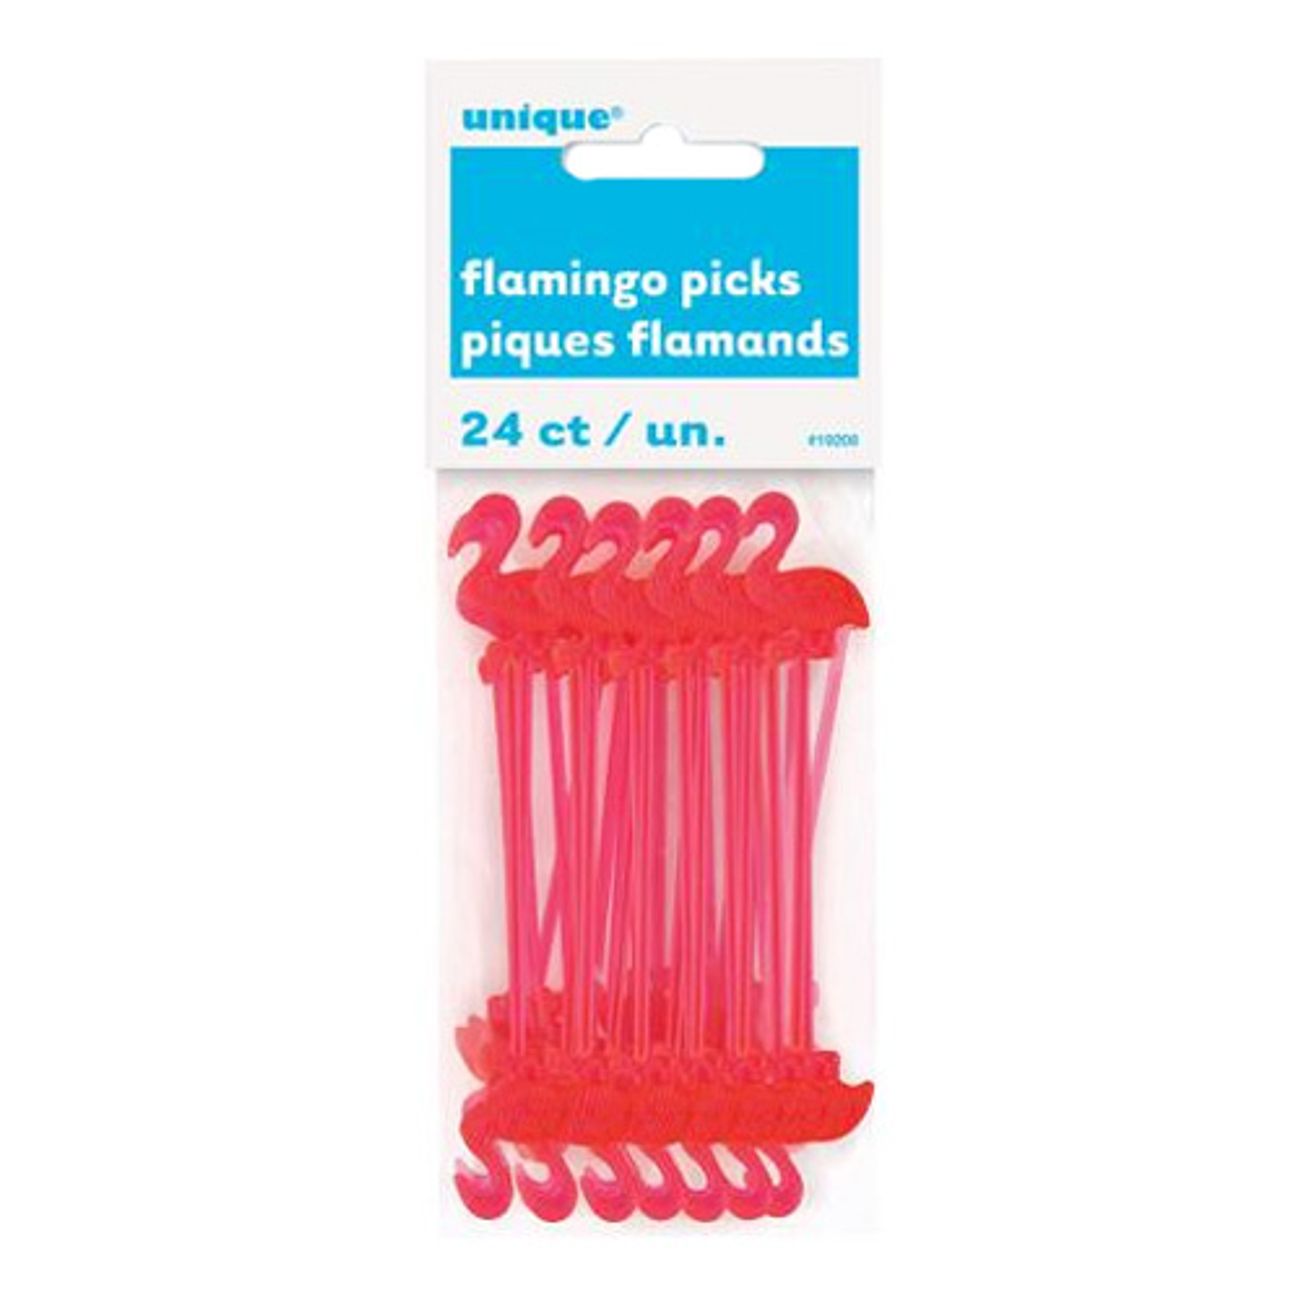 flamingo-partypicks-1